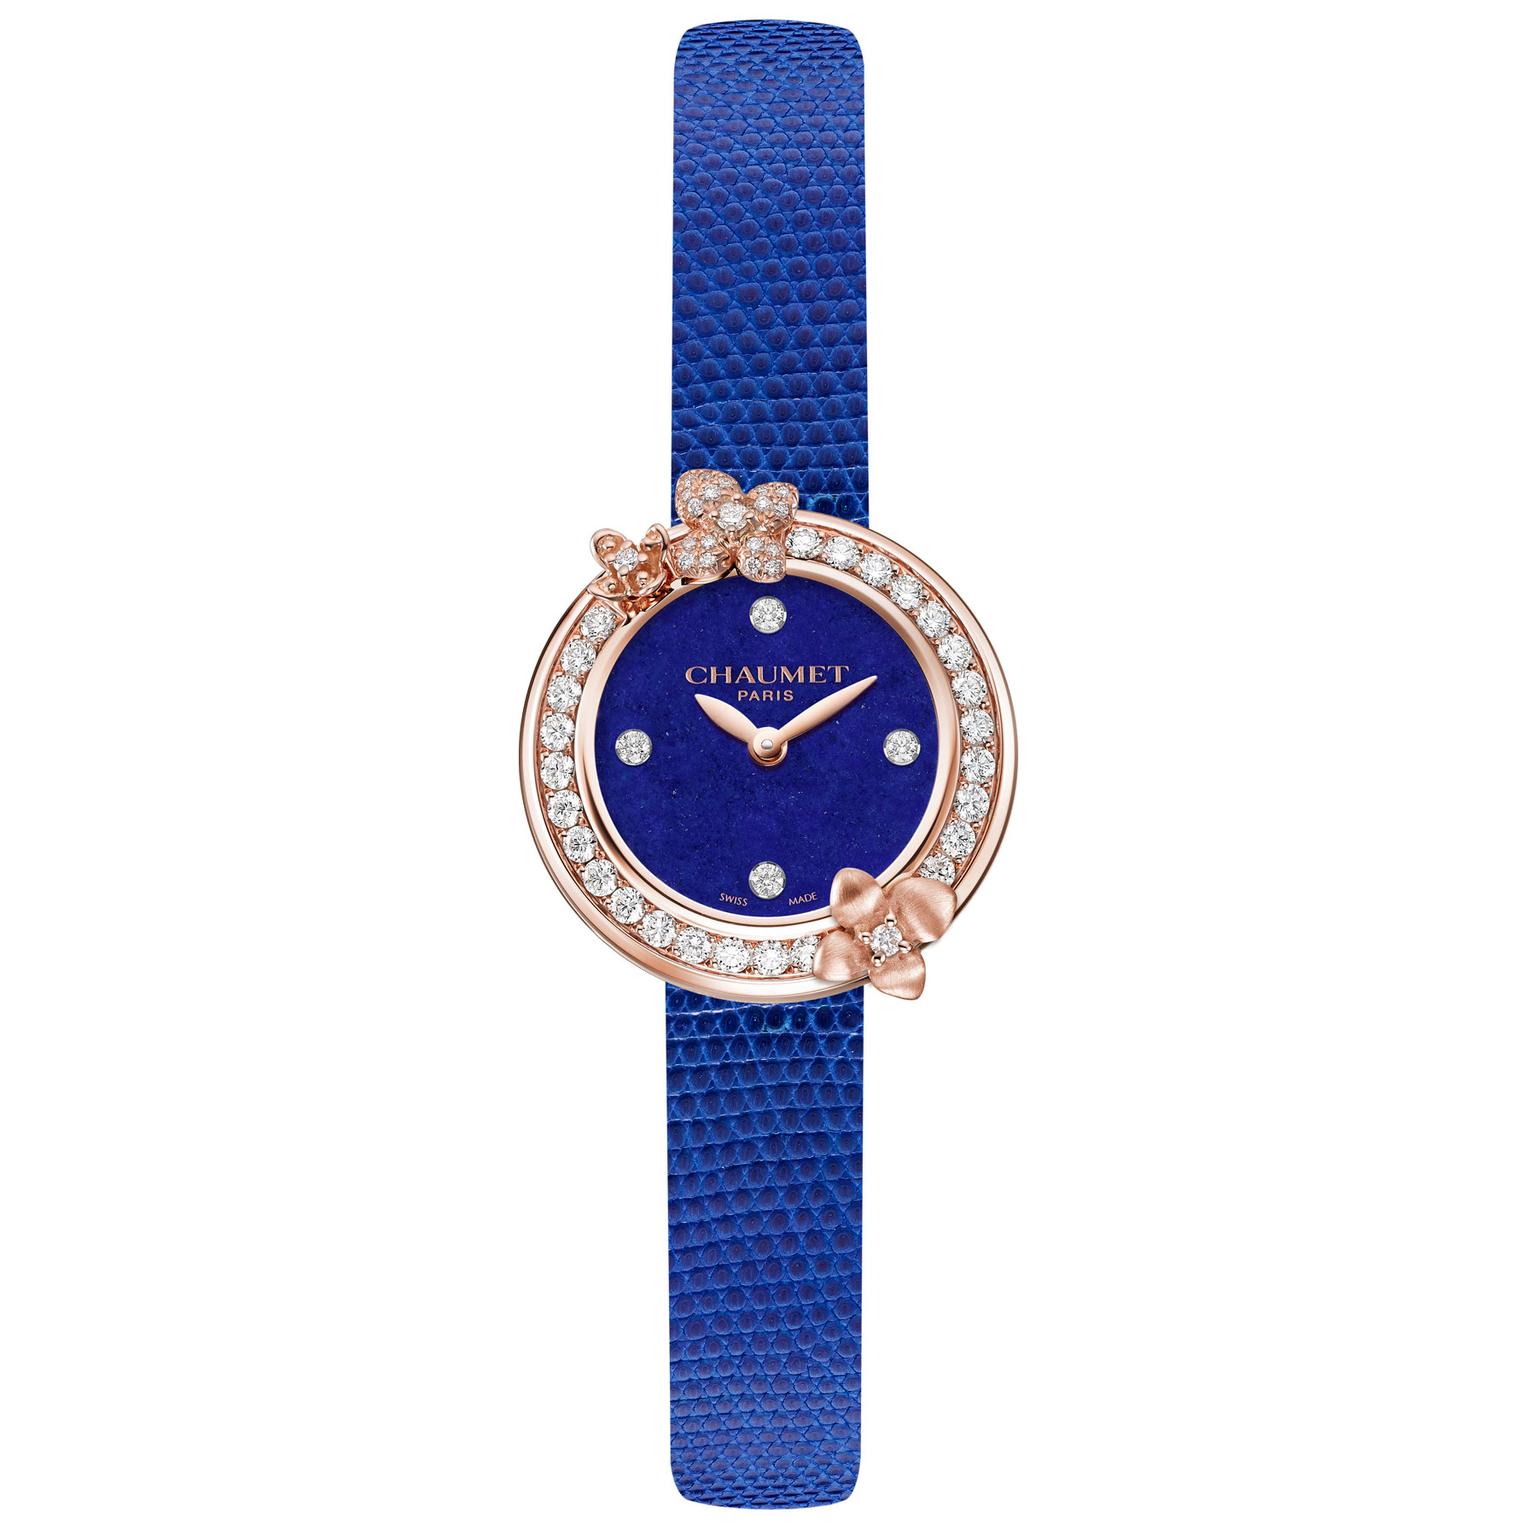 Chaumet Hortensia Eden watch with lapis lazuli dial